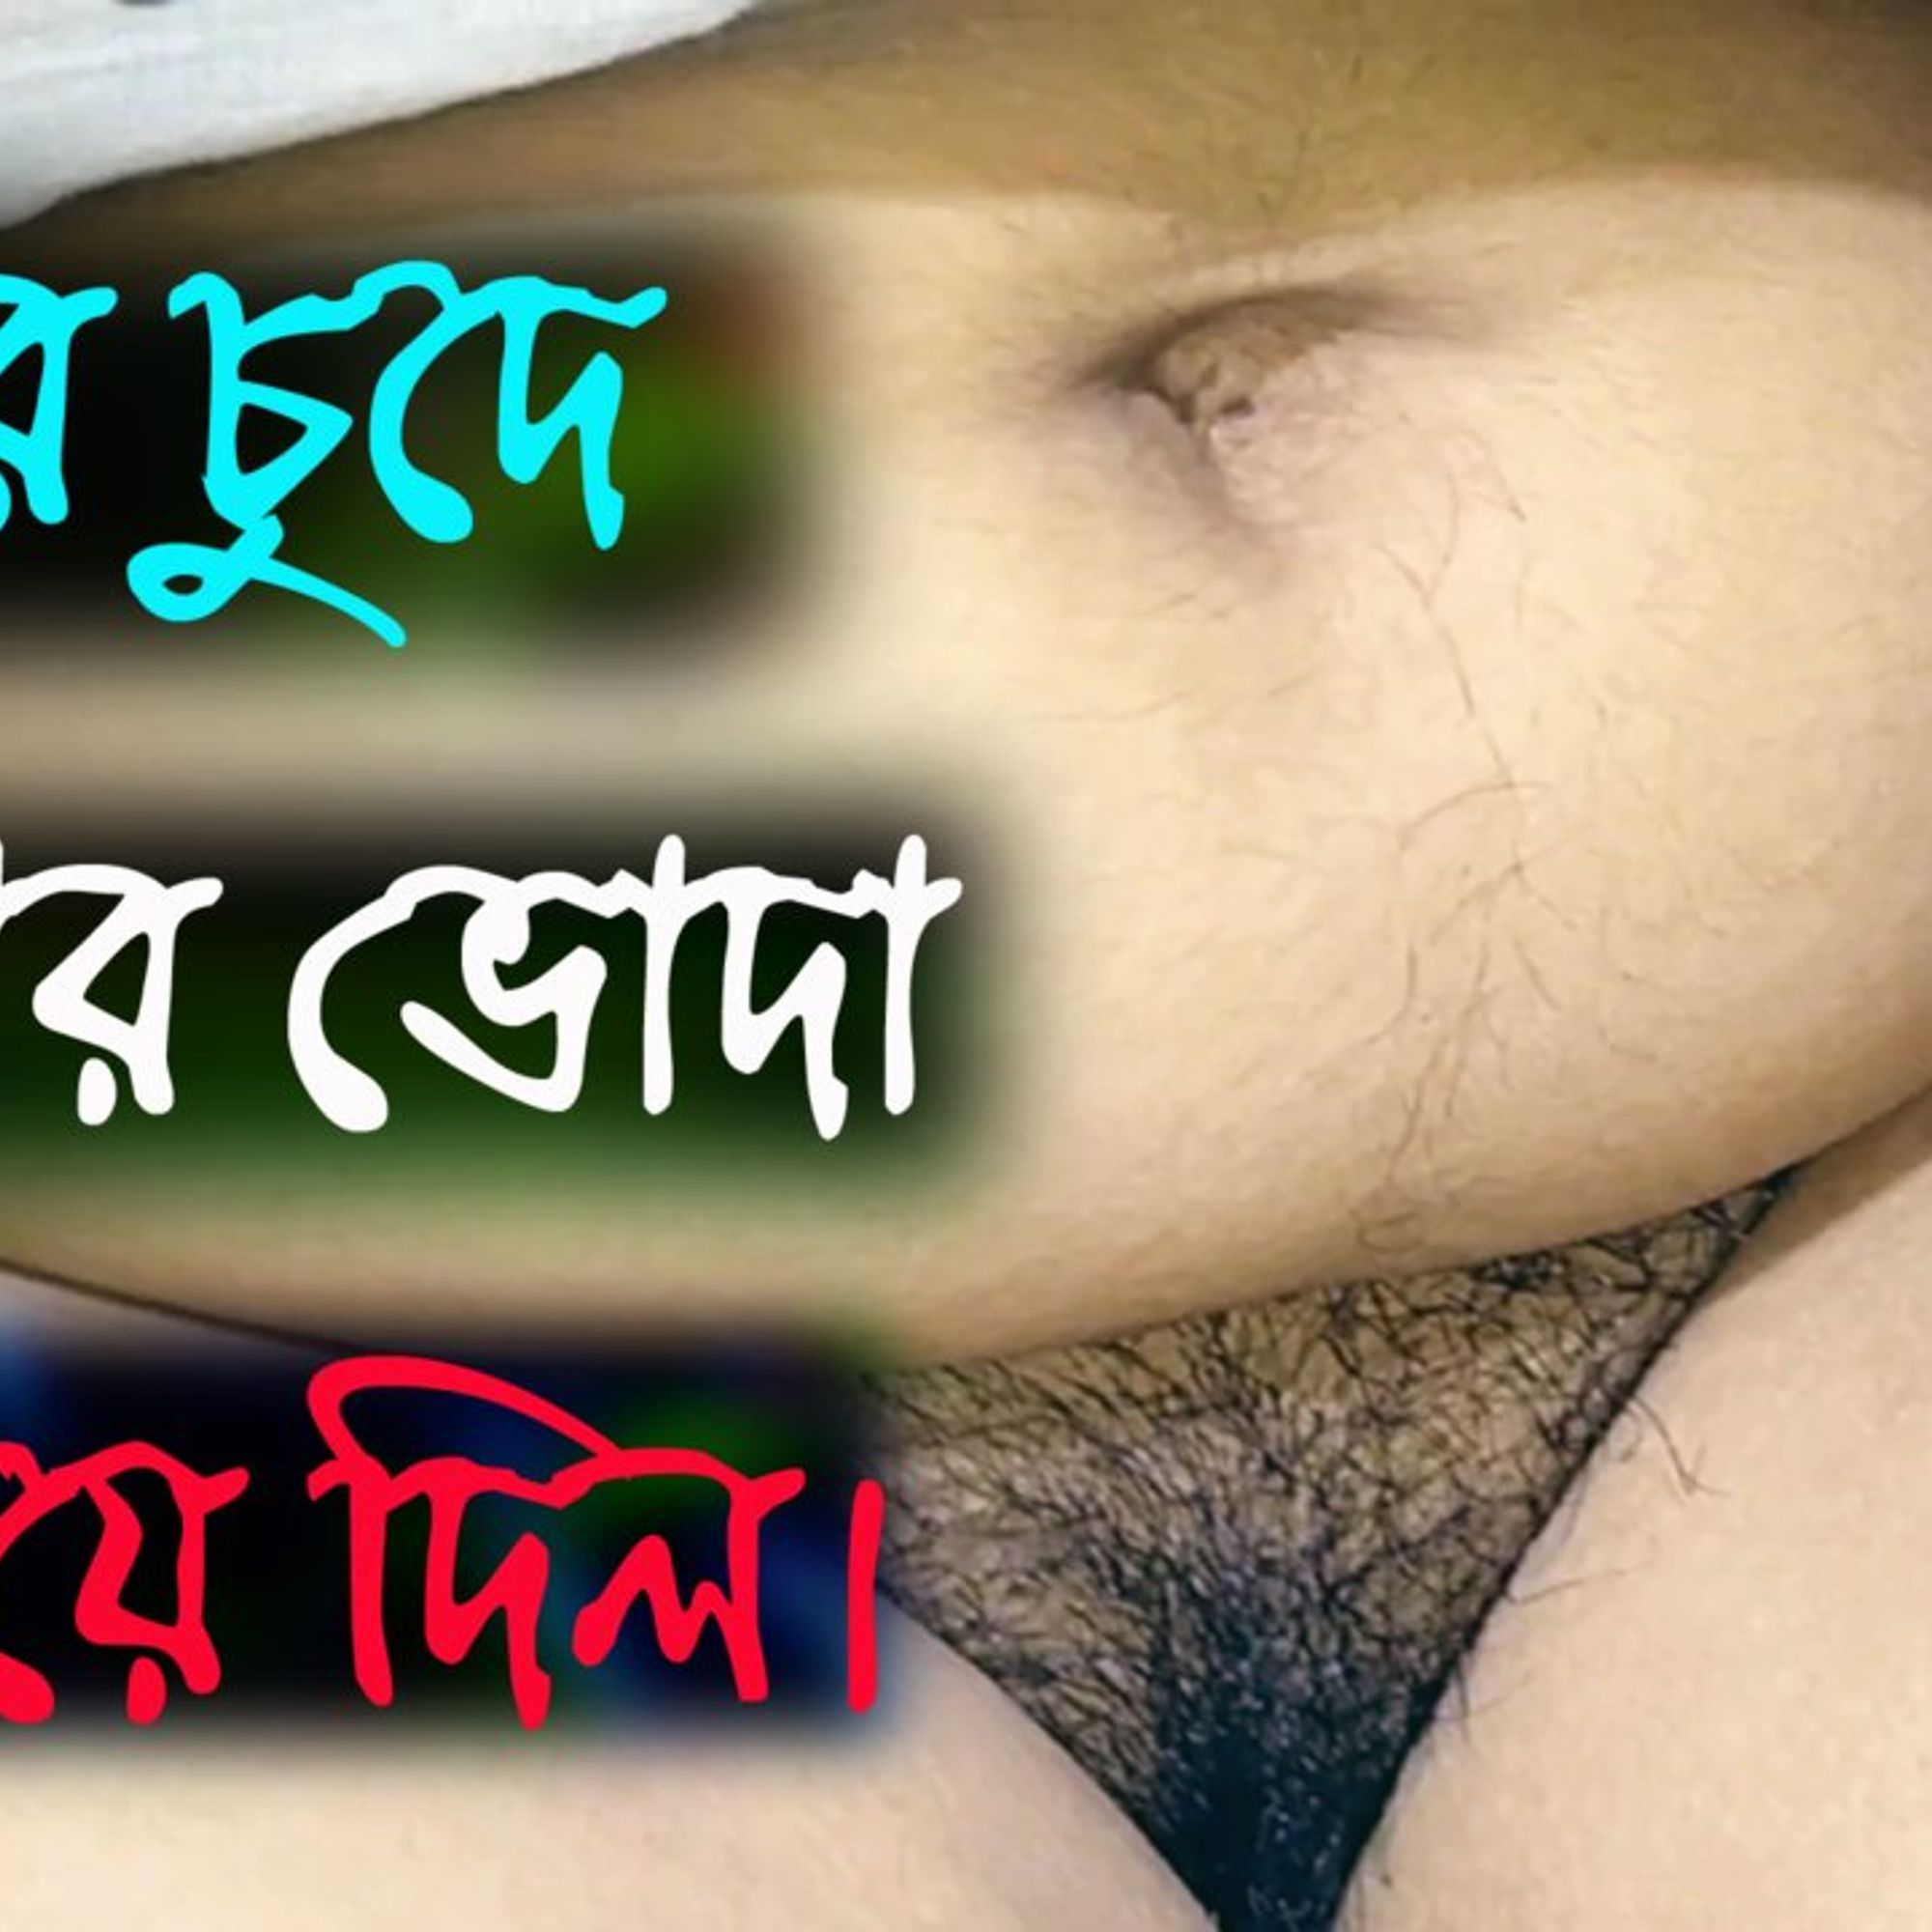 Bangla audio sex